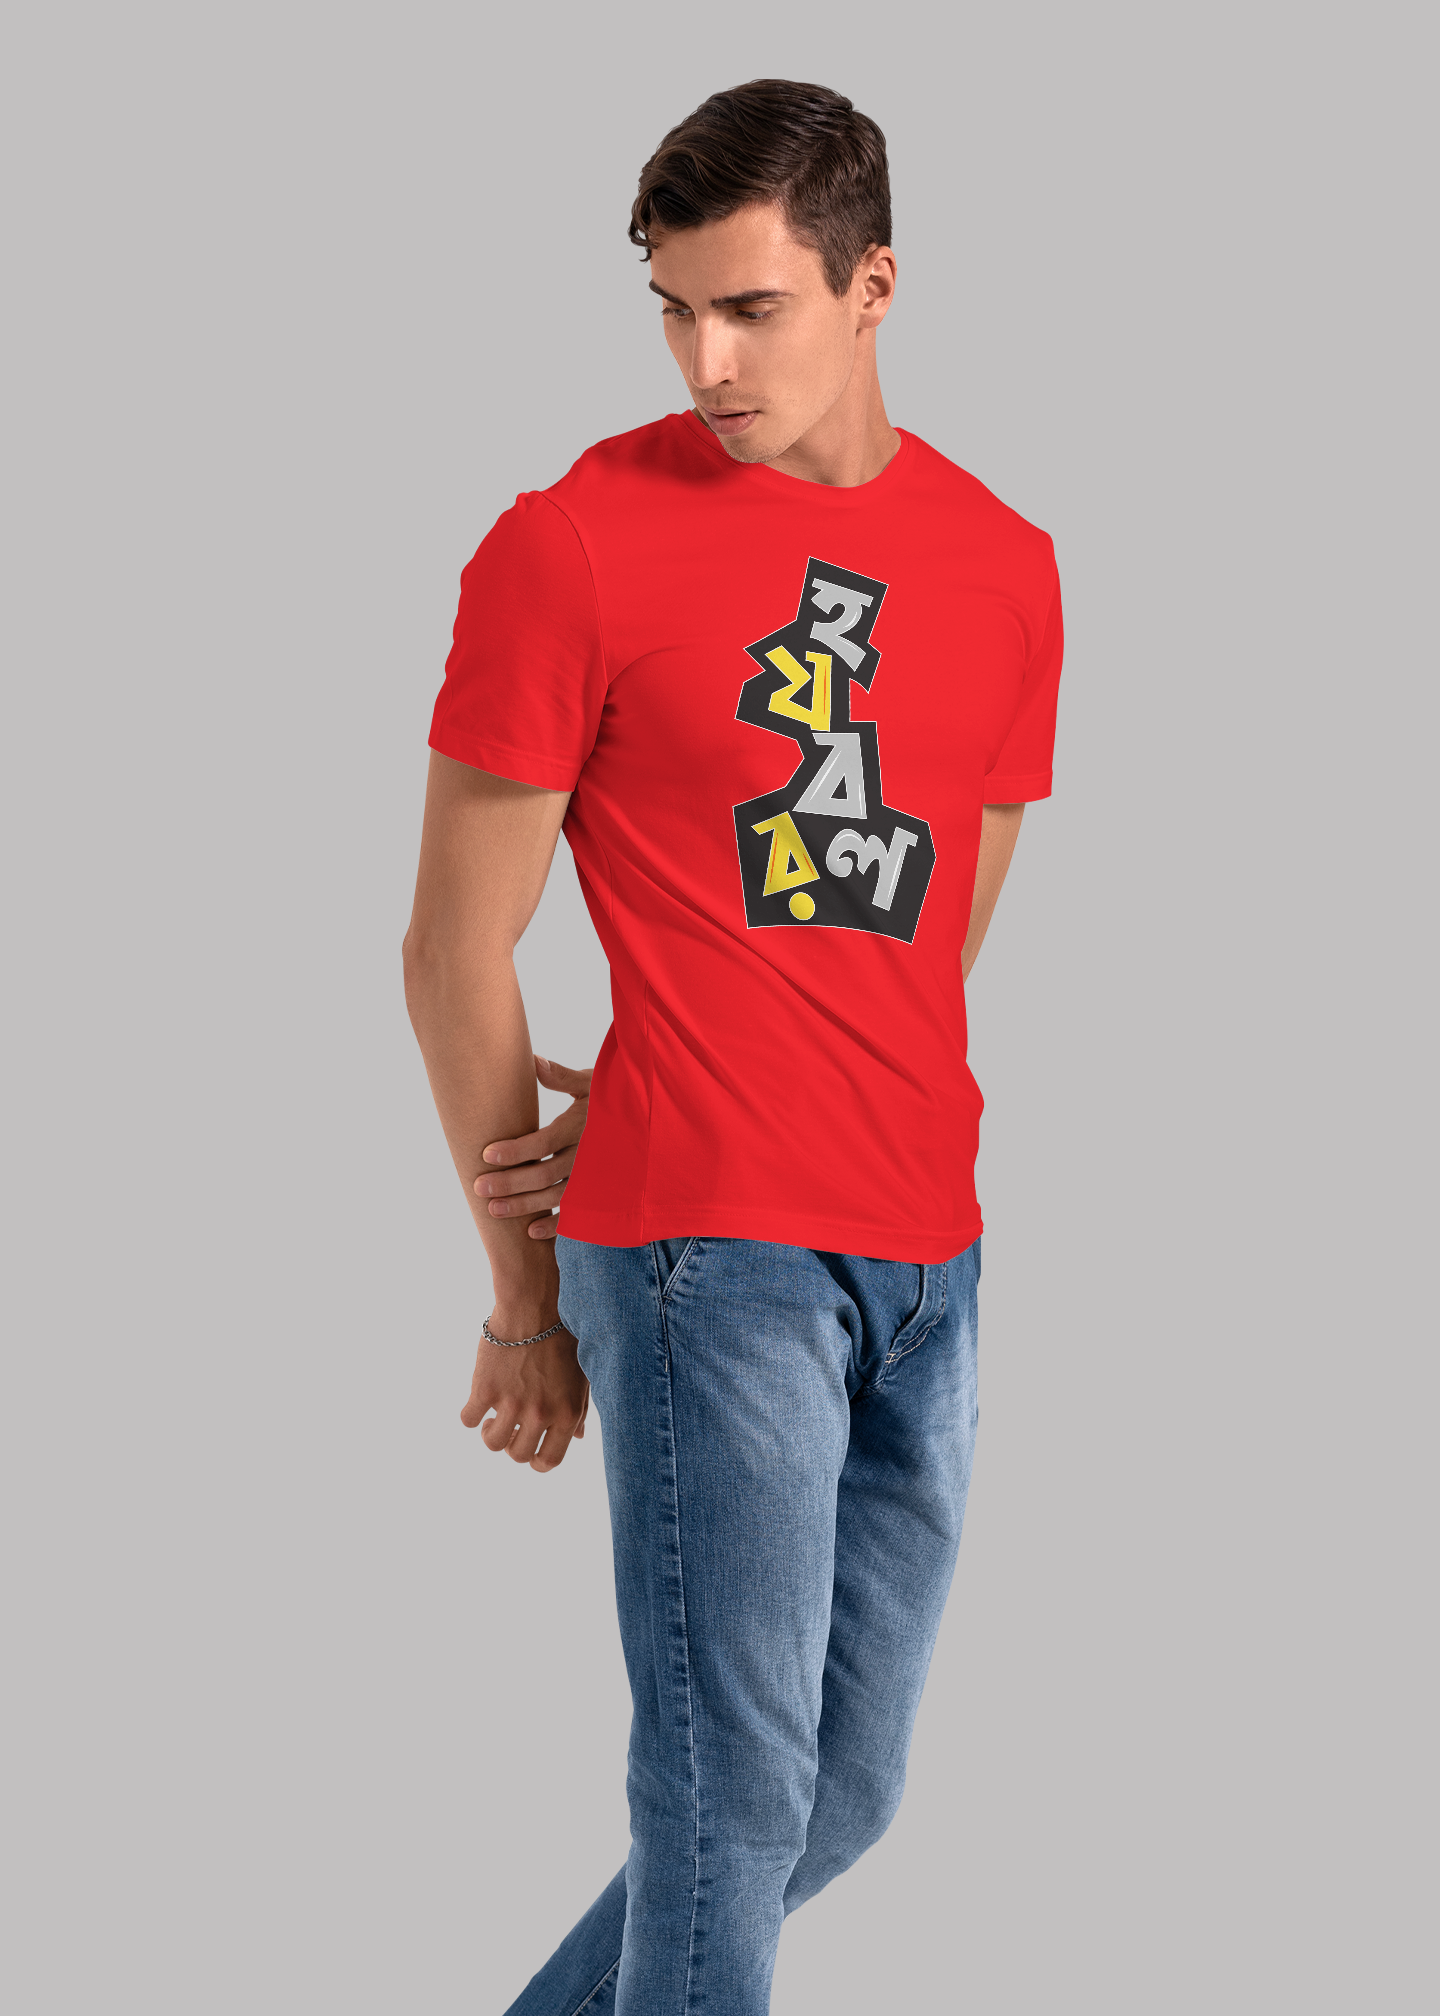 Ho jo bo ro lo bengali Printed Half Sleeve Premium Cotton T-shirt For Men